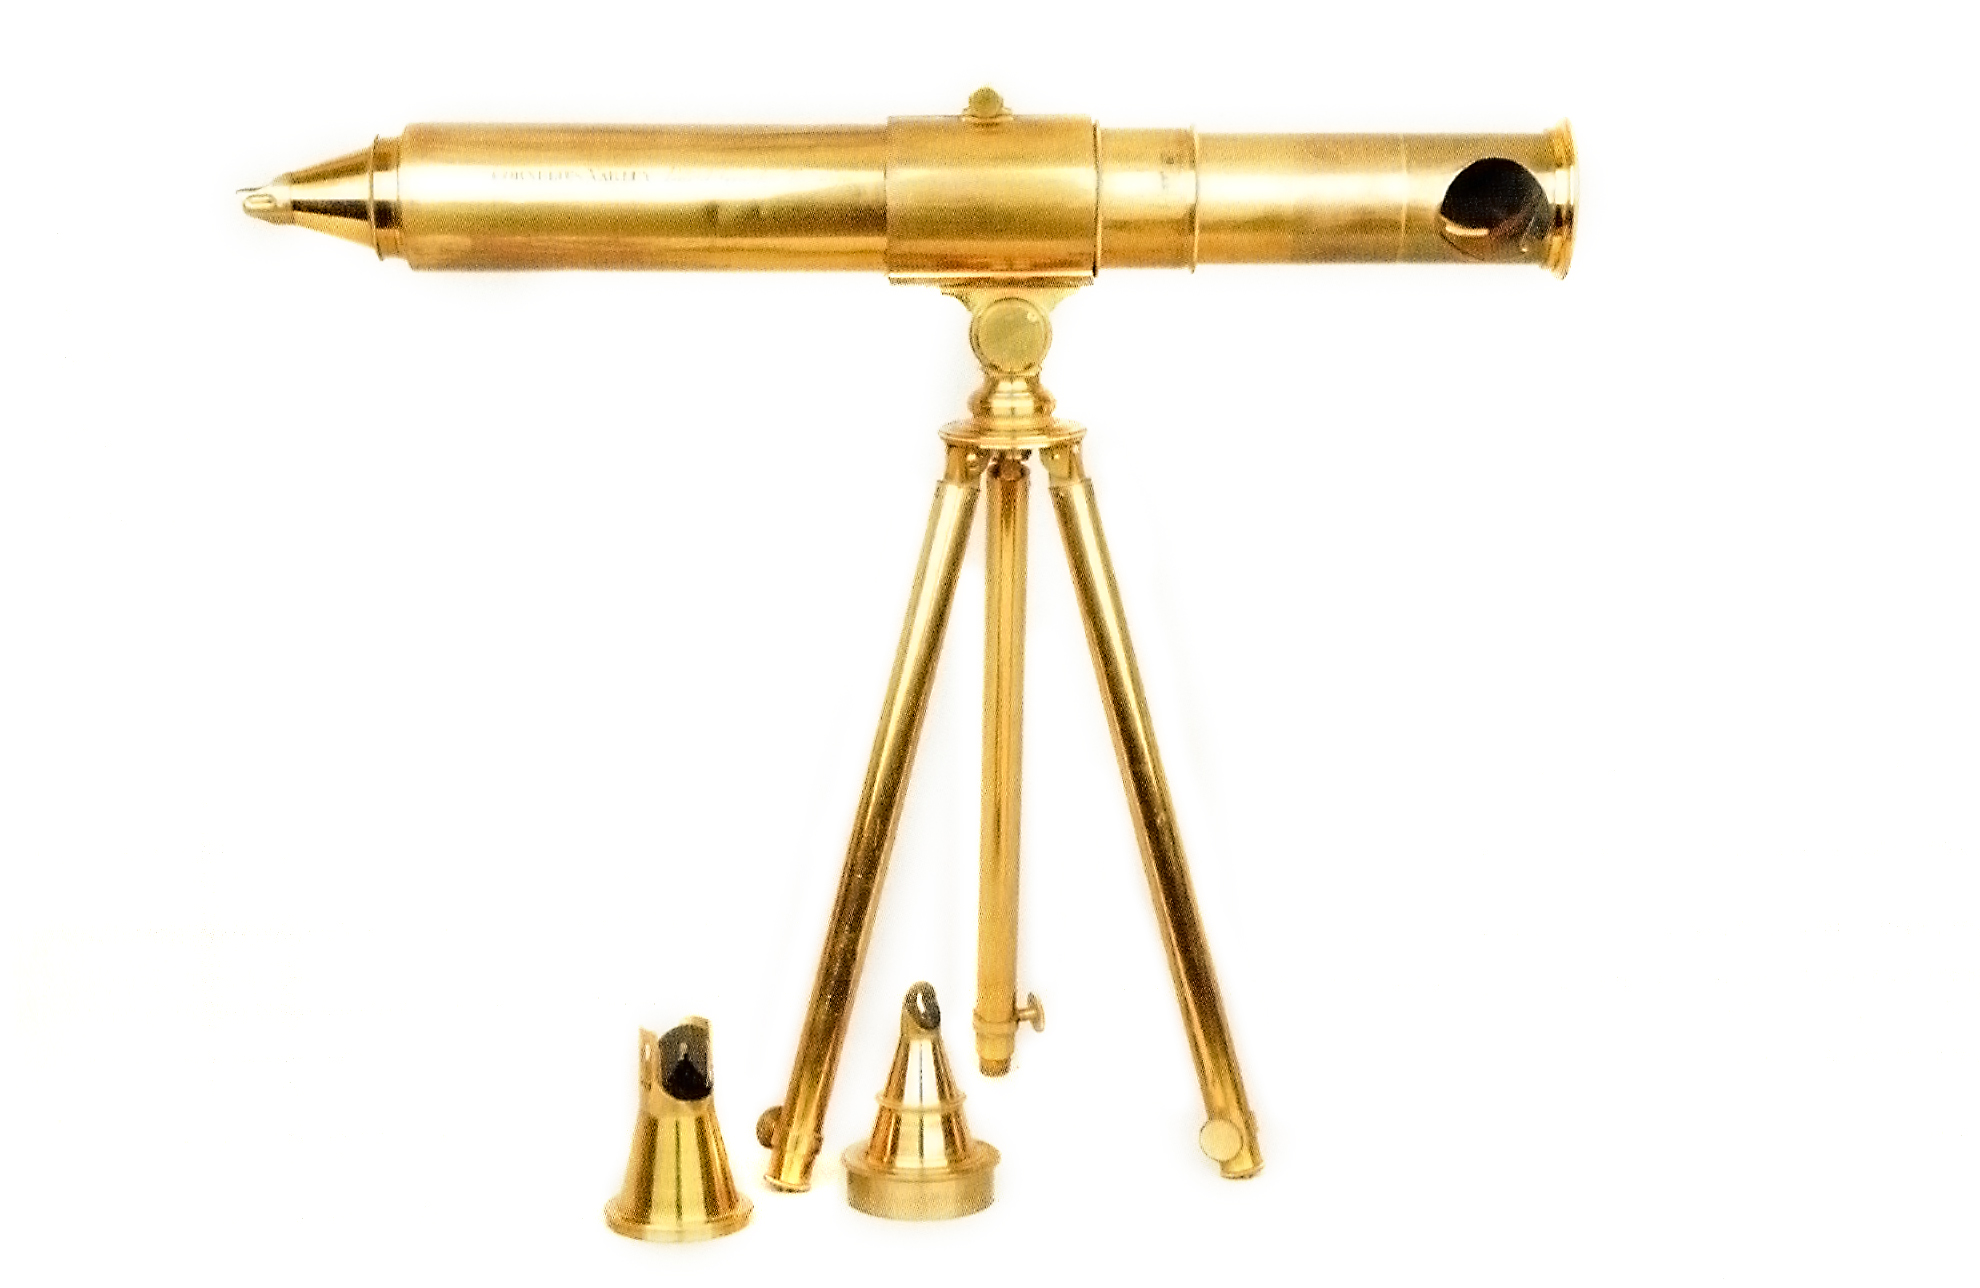  Cornelius Varley’s Patent Graphic Telescope with interchangeable accessories. (Whipple Collections, Cambridge University) 